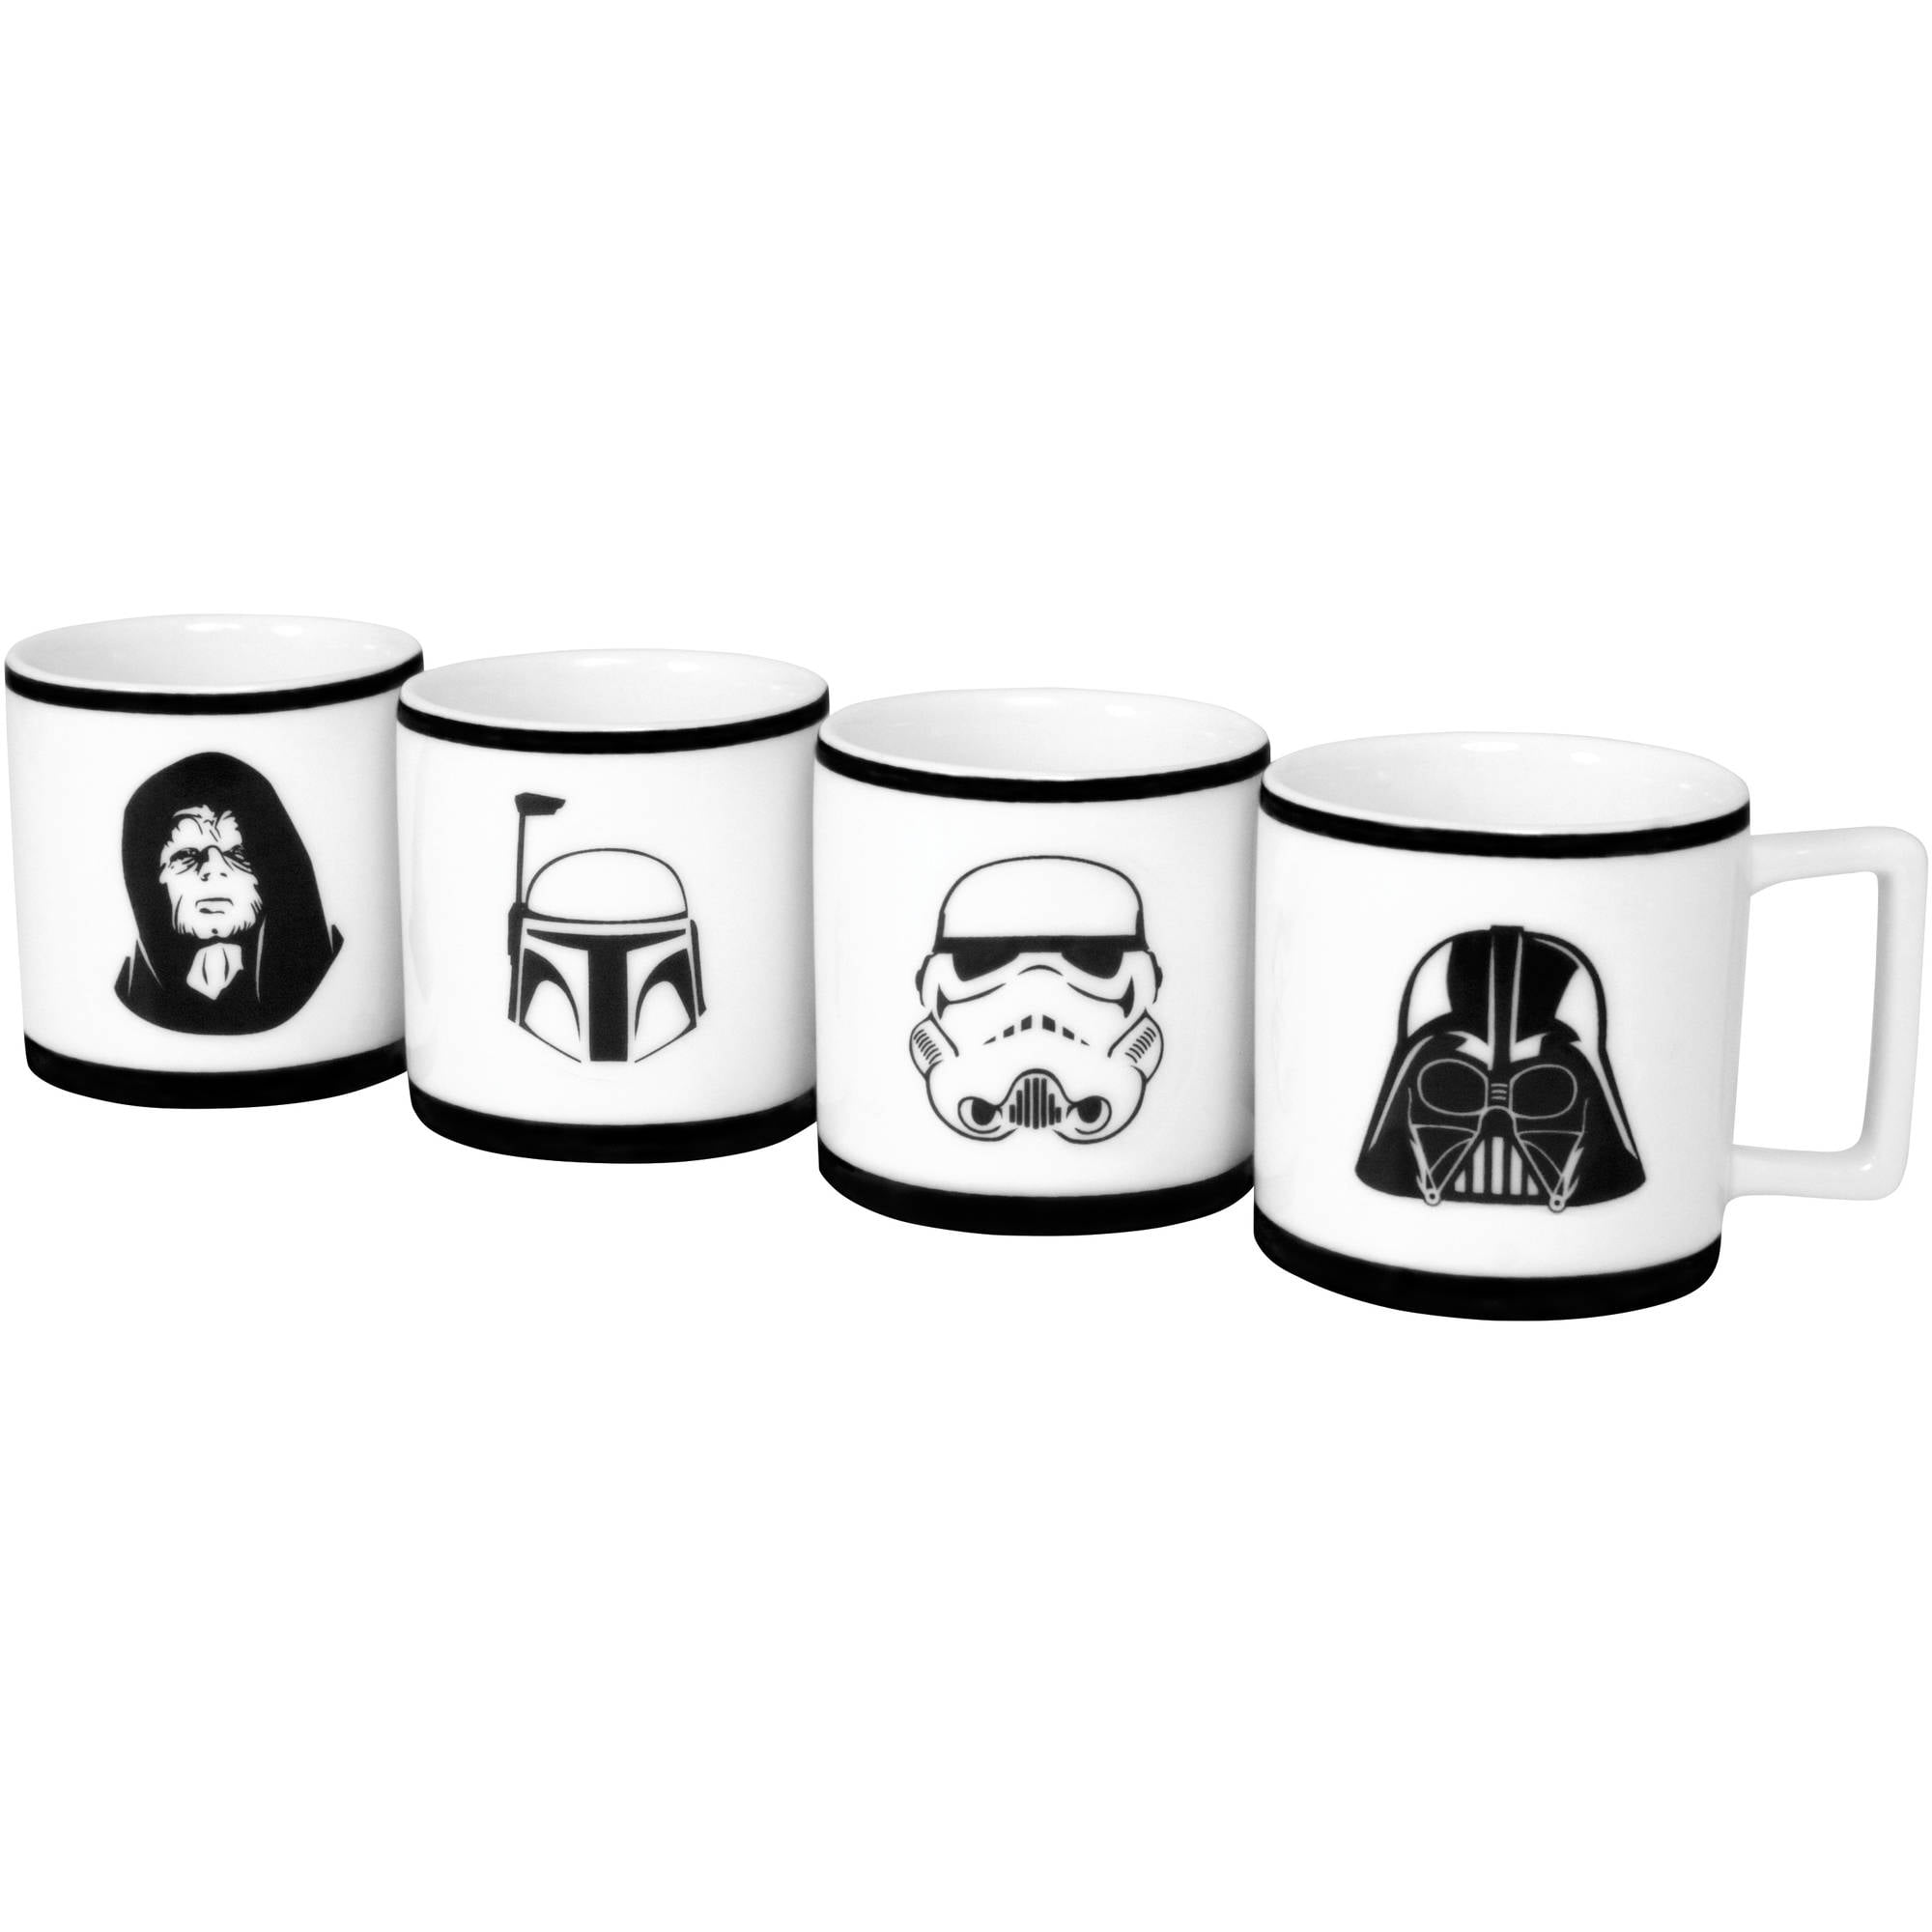 Uncanny Brands Star Wars Return of the Jedi 40th Anniversary Mug Warmer Set